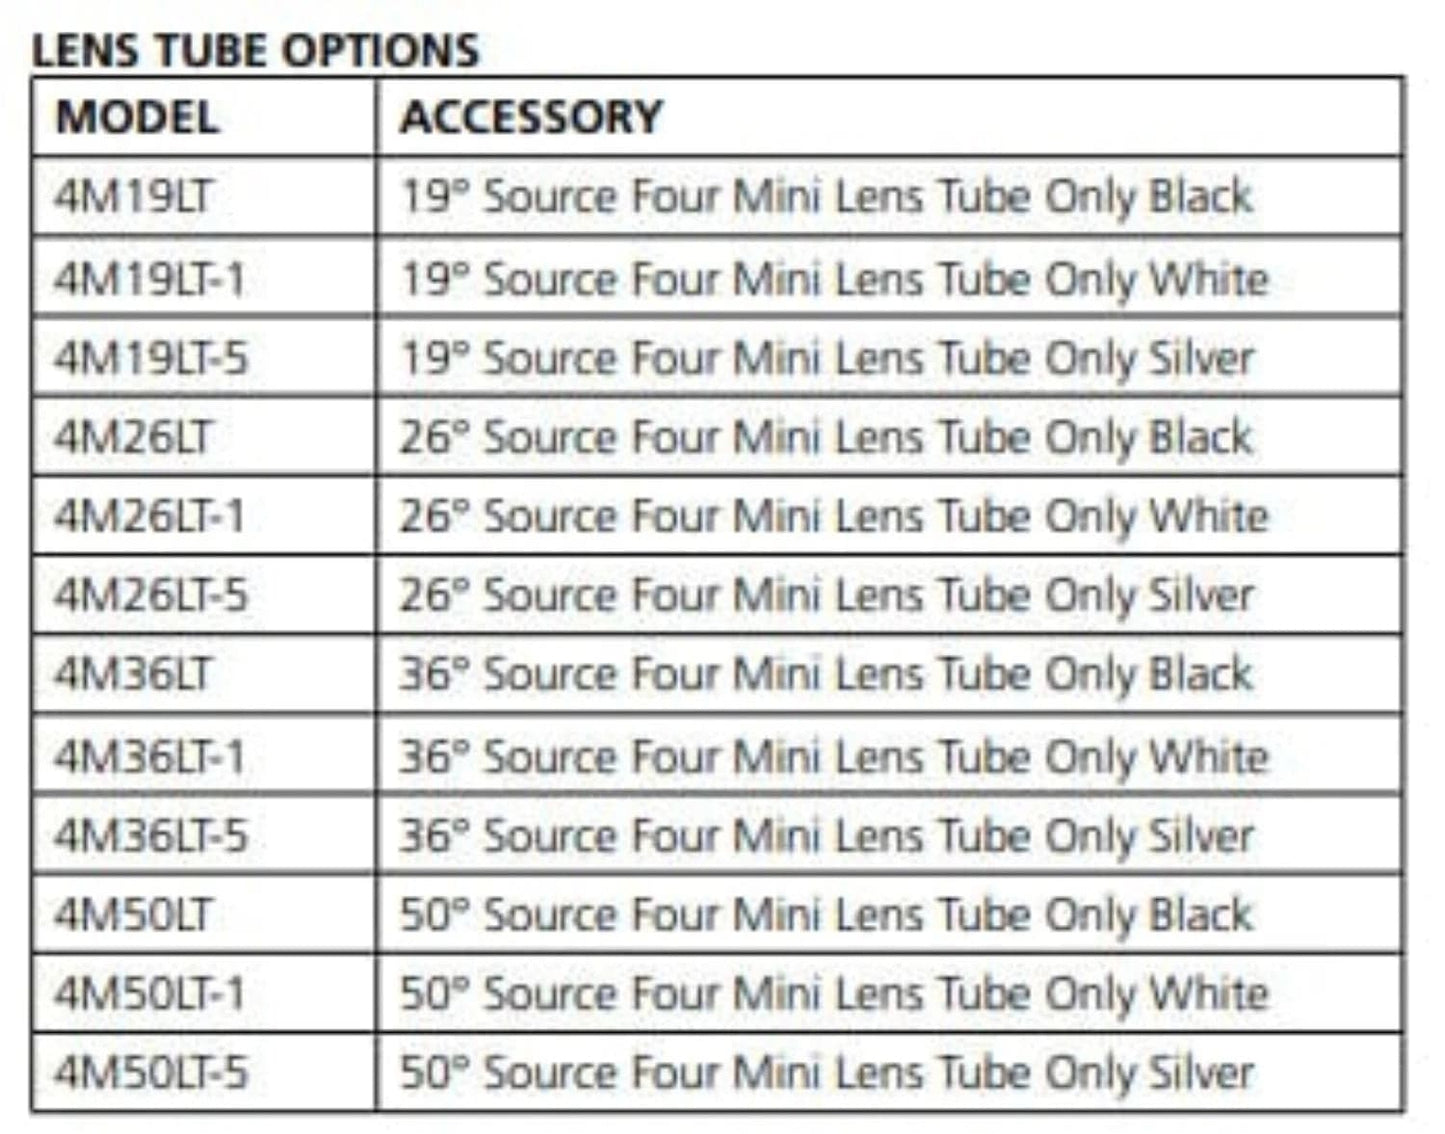 ETC Source Four Mini LED Ellipsoidal 5000 K, 50-Degree Lens Tube with Edison Plug - Silver (Portable) - PSSL ProSound and Stage Lighting